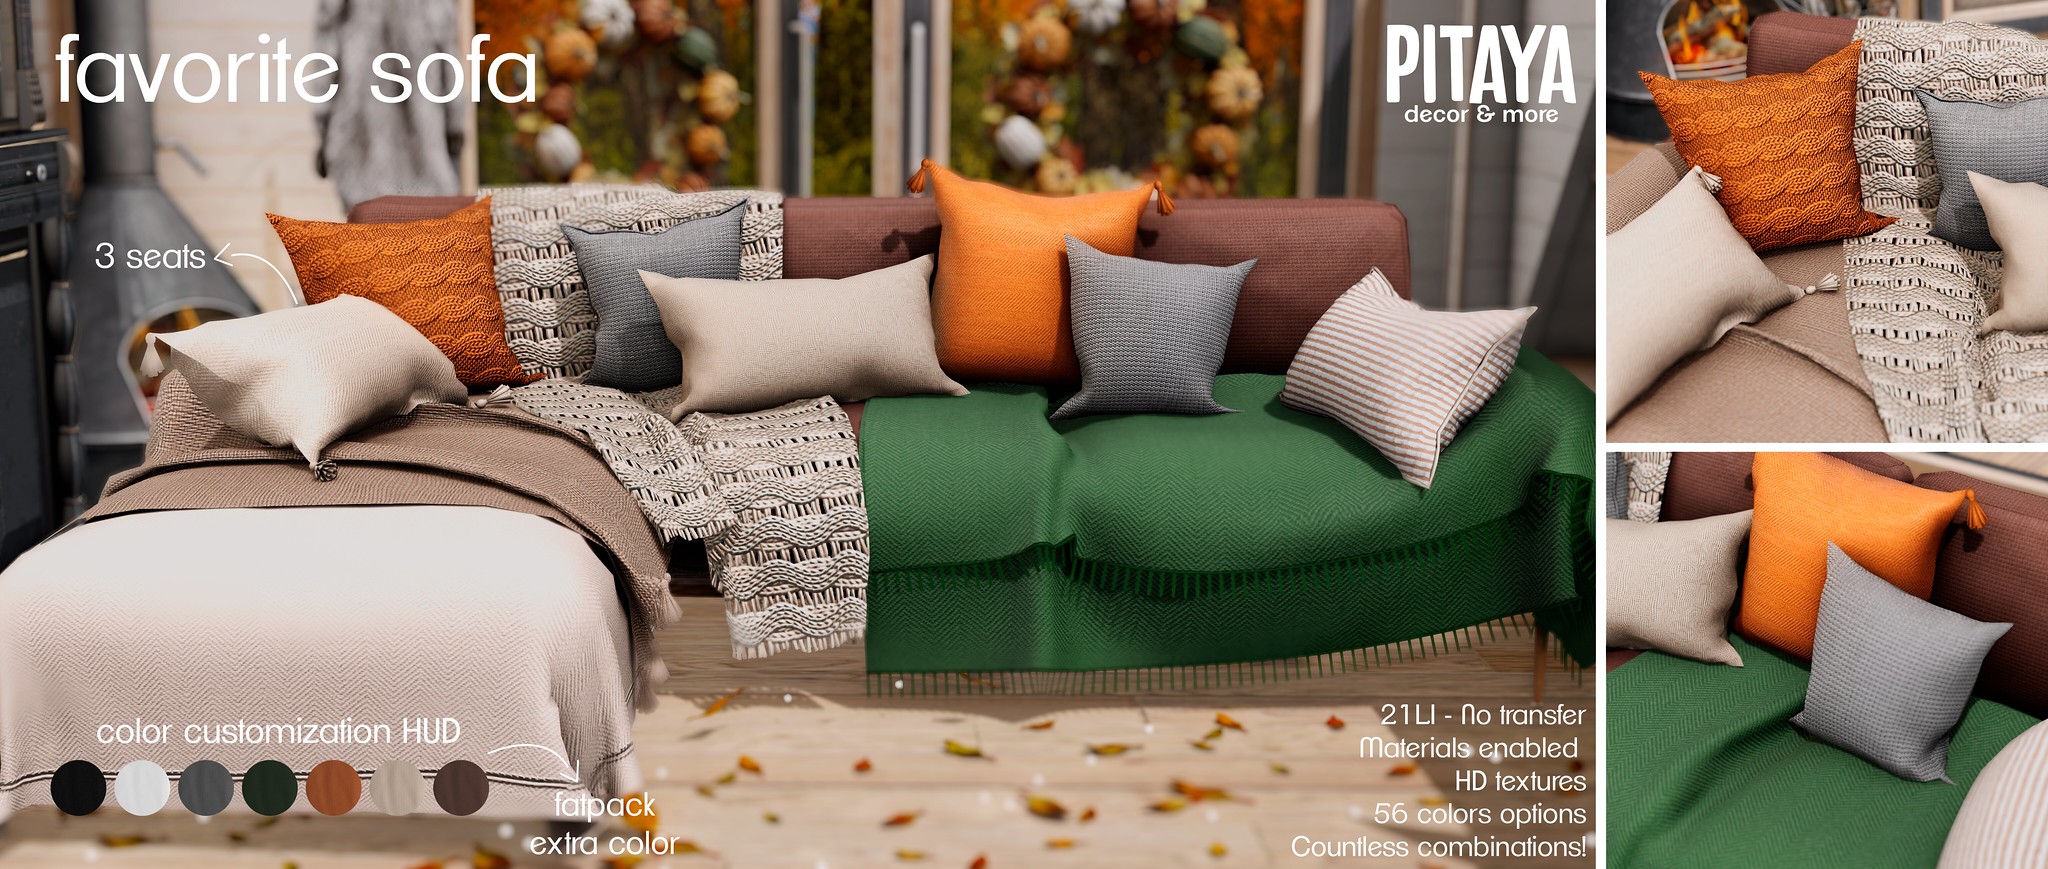 Pitaya – Favorite Sofa